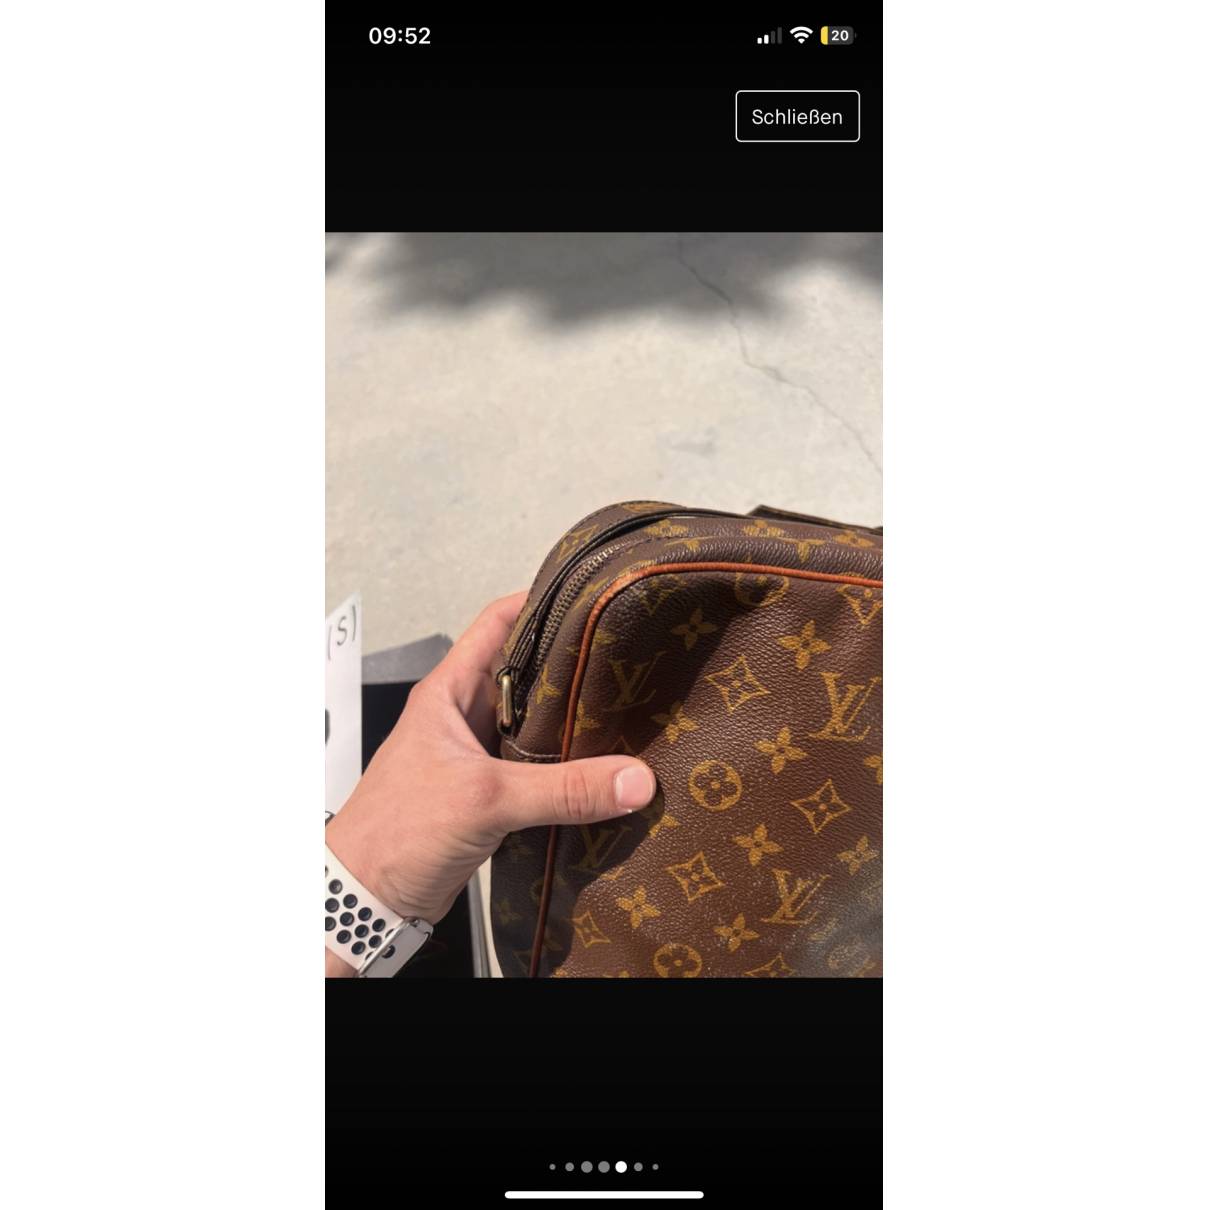 Louis Vuitton Utility Phone Sleeve Bag